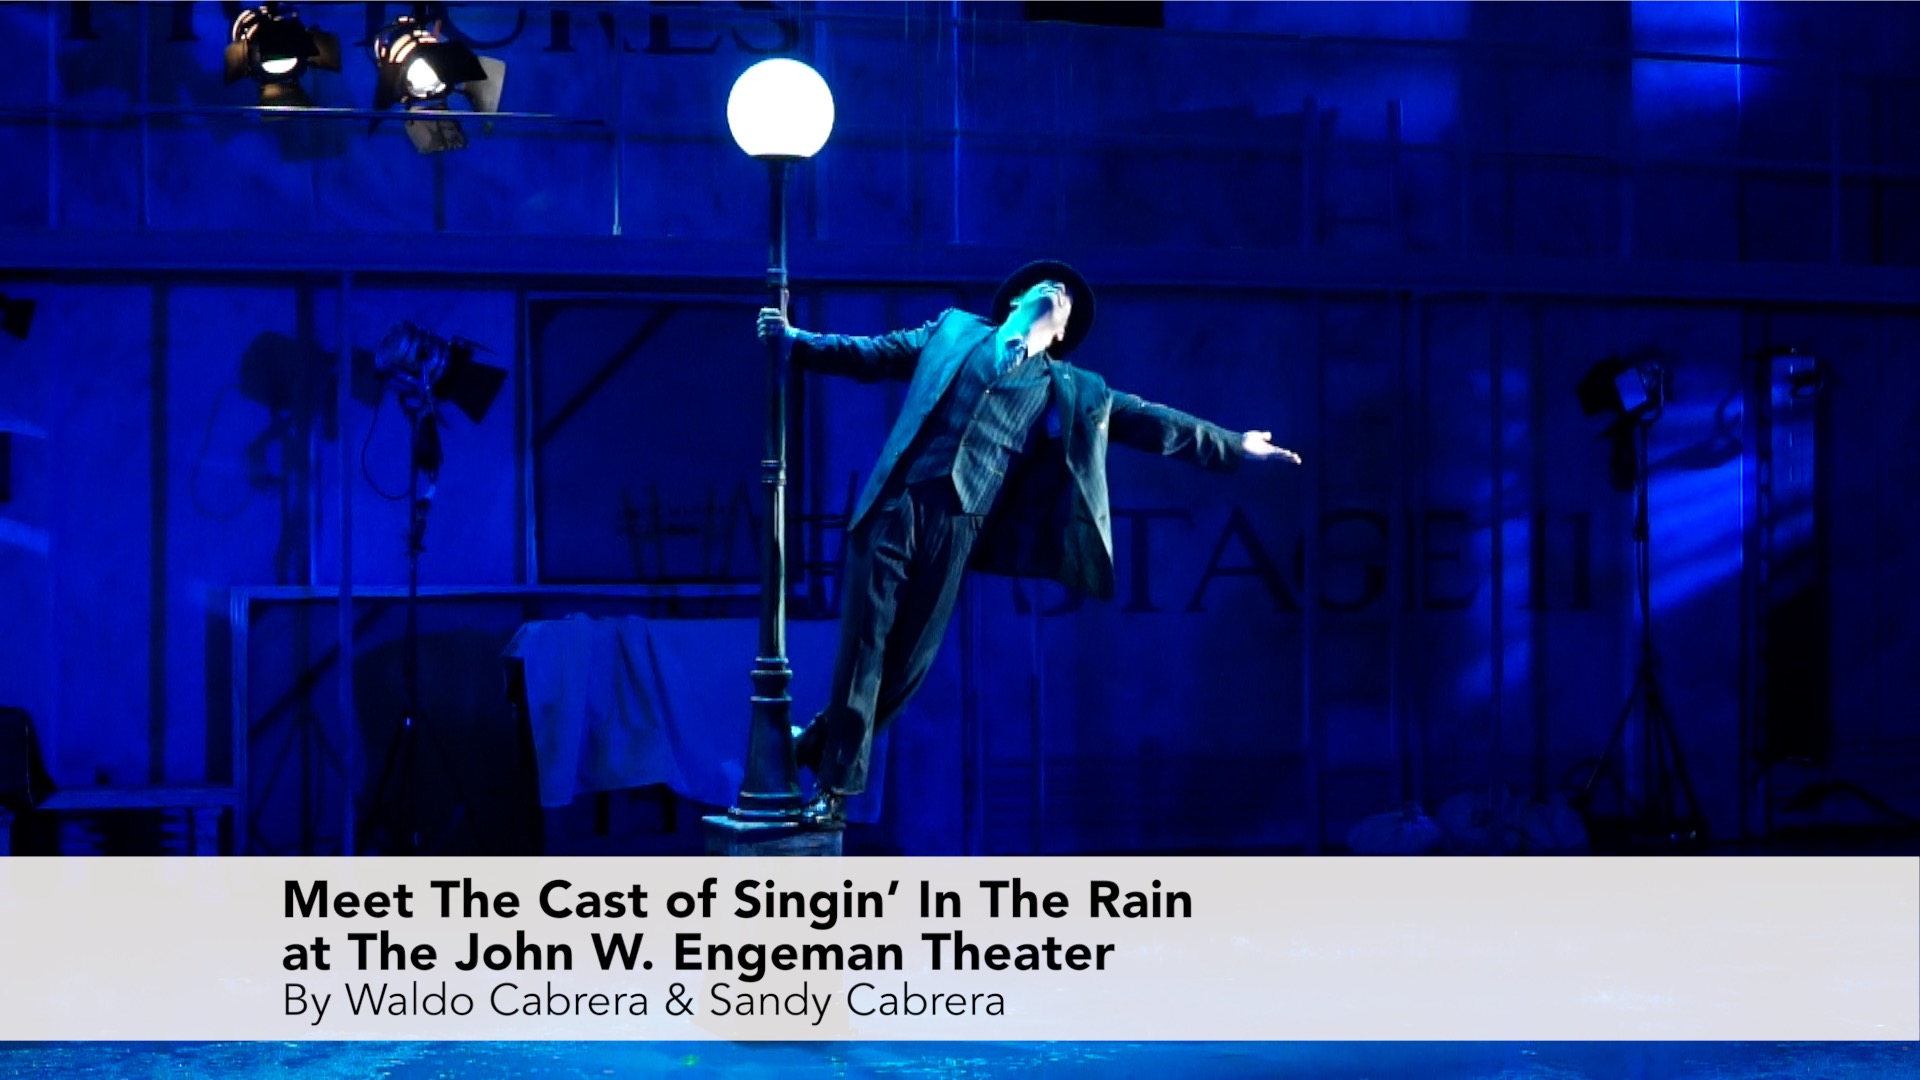 Meet The Cast of Singin' In The Rain At the John W. Engeman Theater